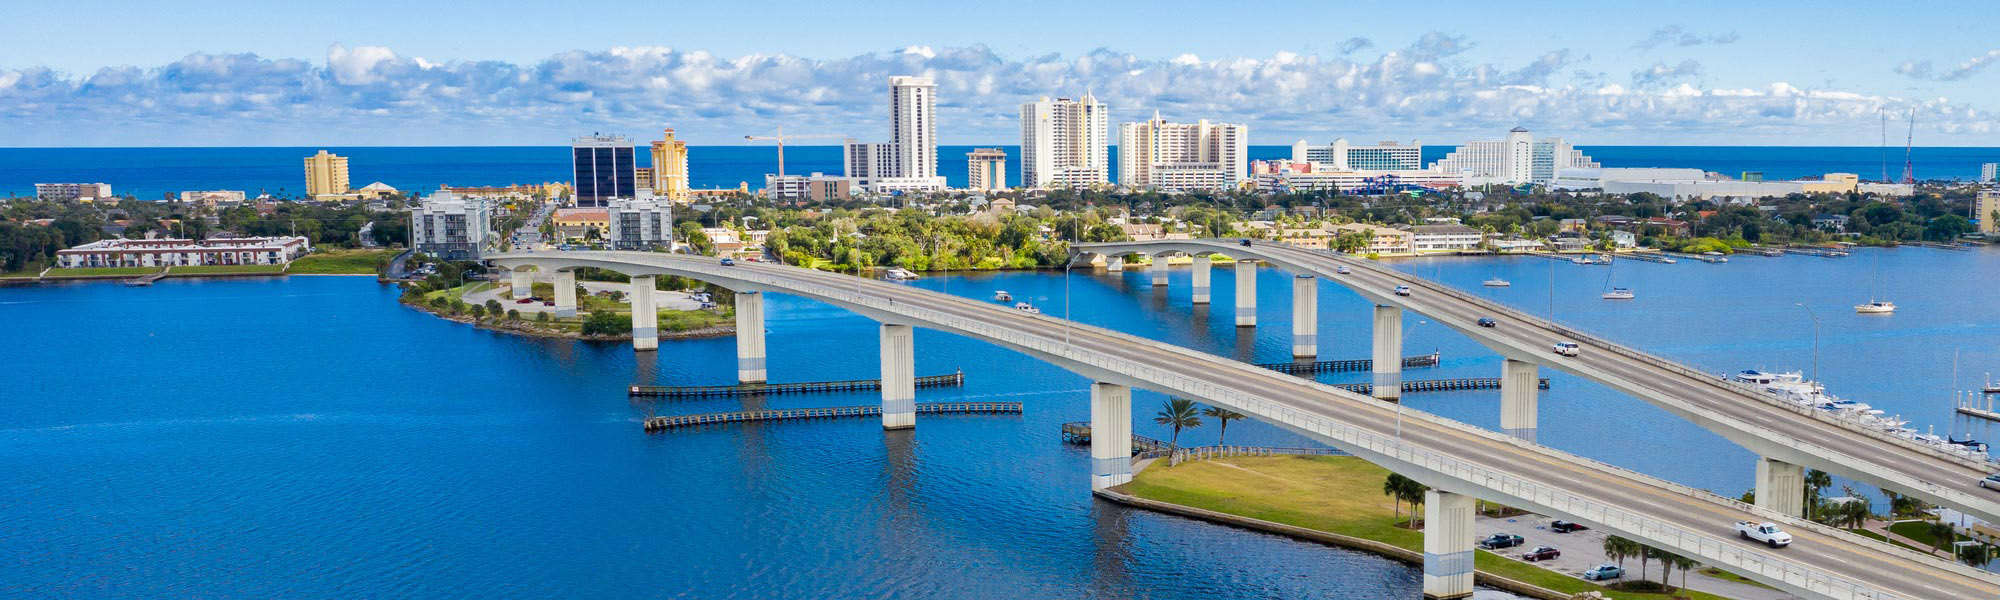 Drone angle view of Daytona Beach skyline and bridges